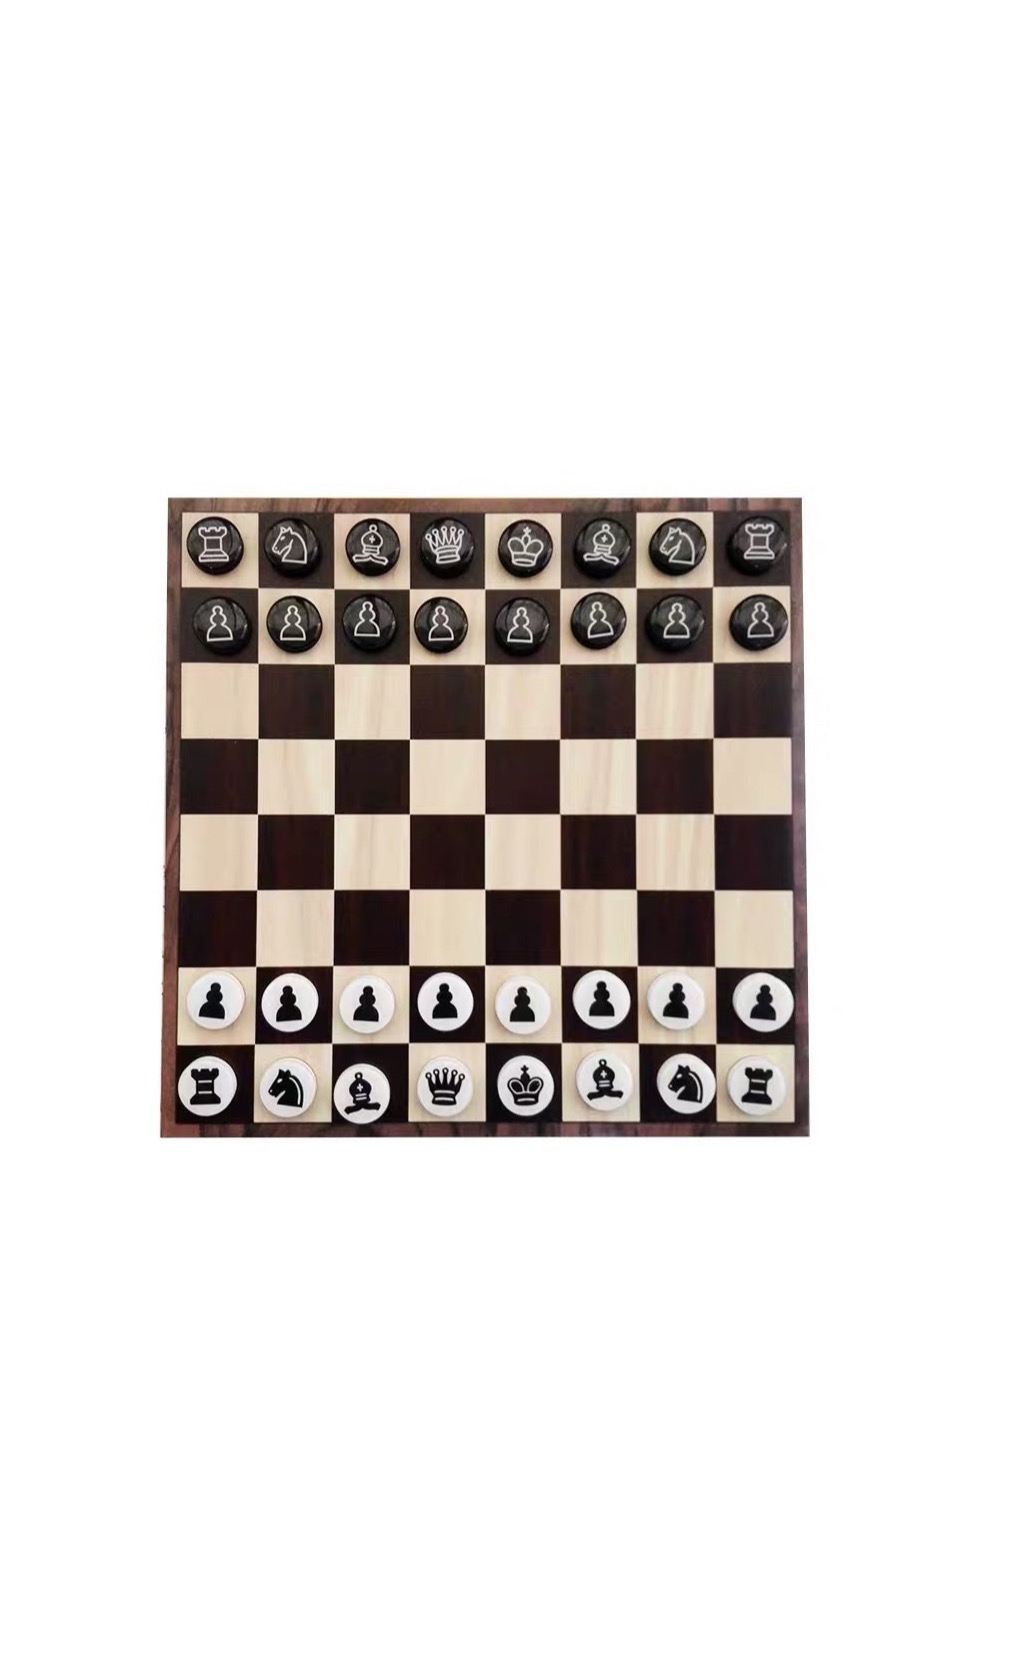 Details about   Longfield Games Travel Chess Magnetic Magnetic 24 x 24 cm Chess Magnetic net magnetisch 24 x 24 cm Schachspiel magnetisch data-mtsrclang=en-US href=# onclick=return false; 							show original title 